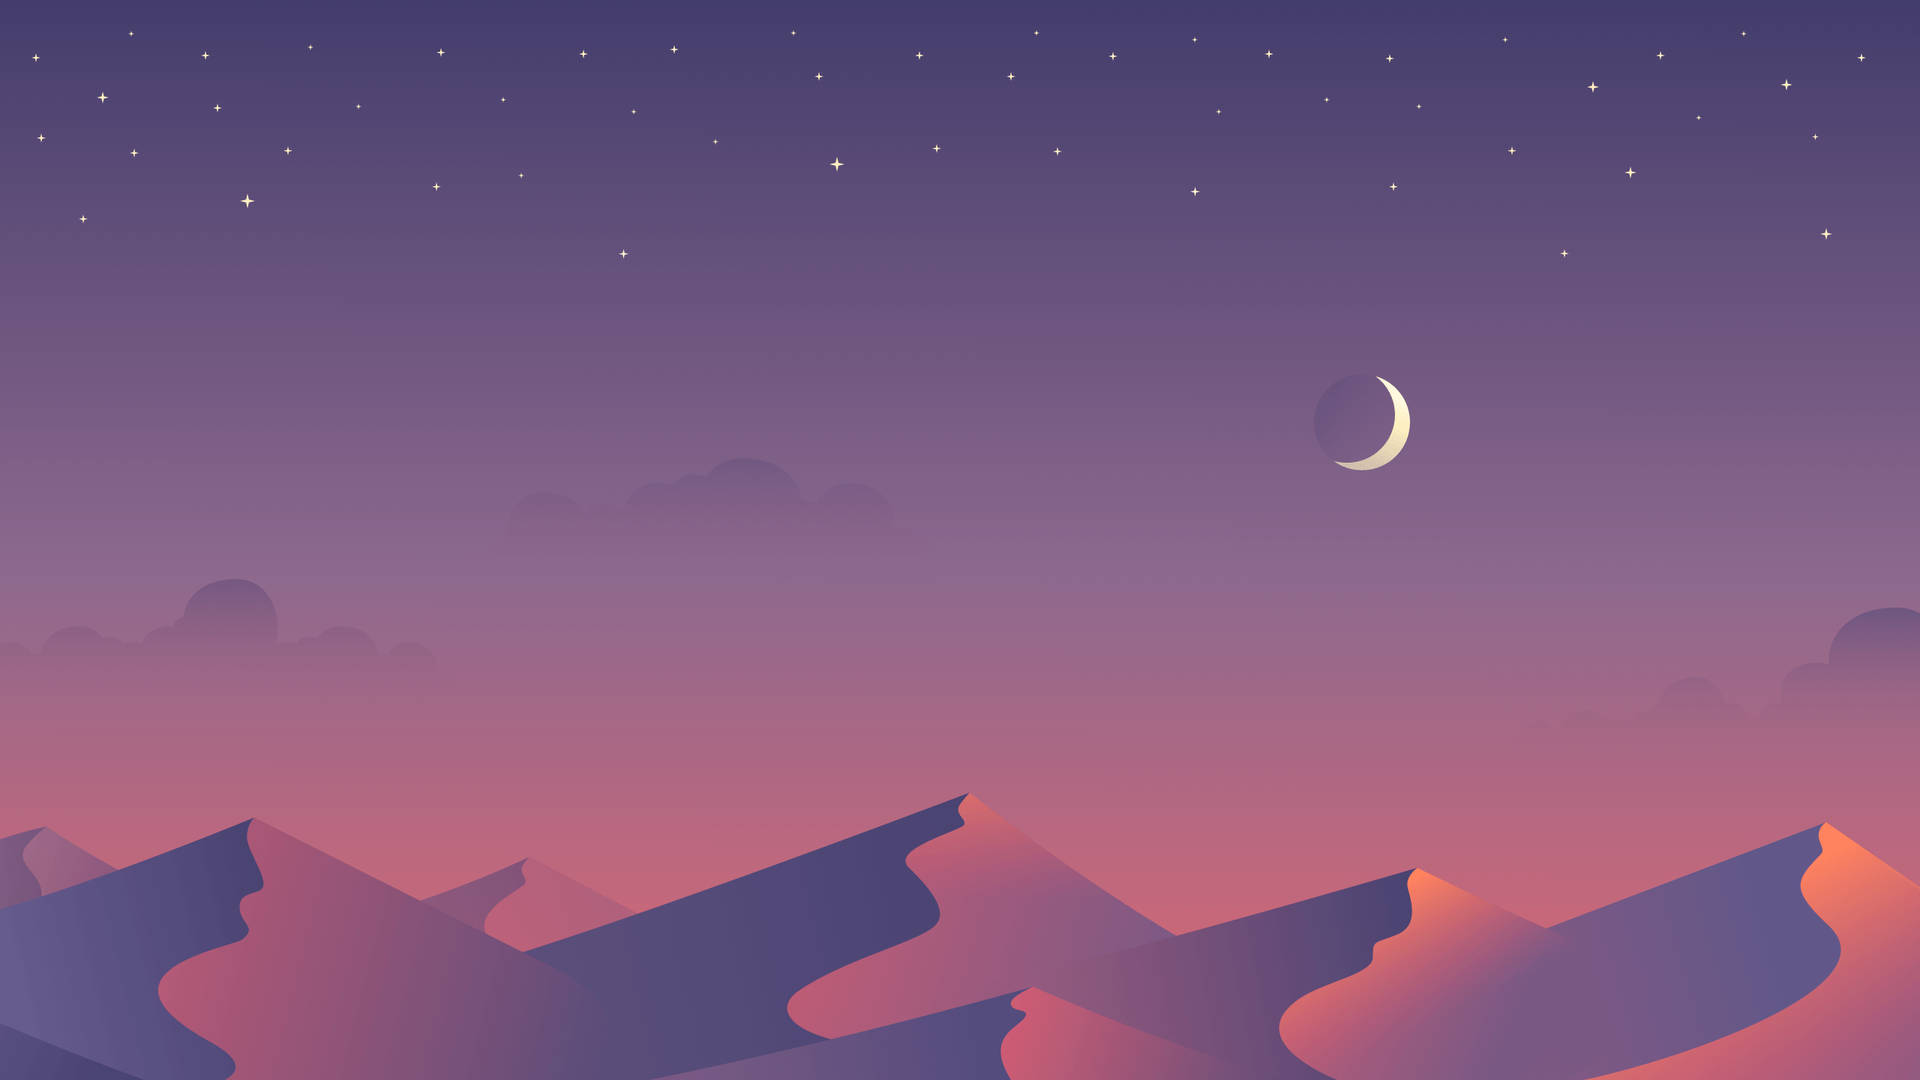 Aesthetic Desktop Night Sky Background